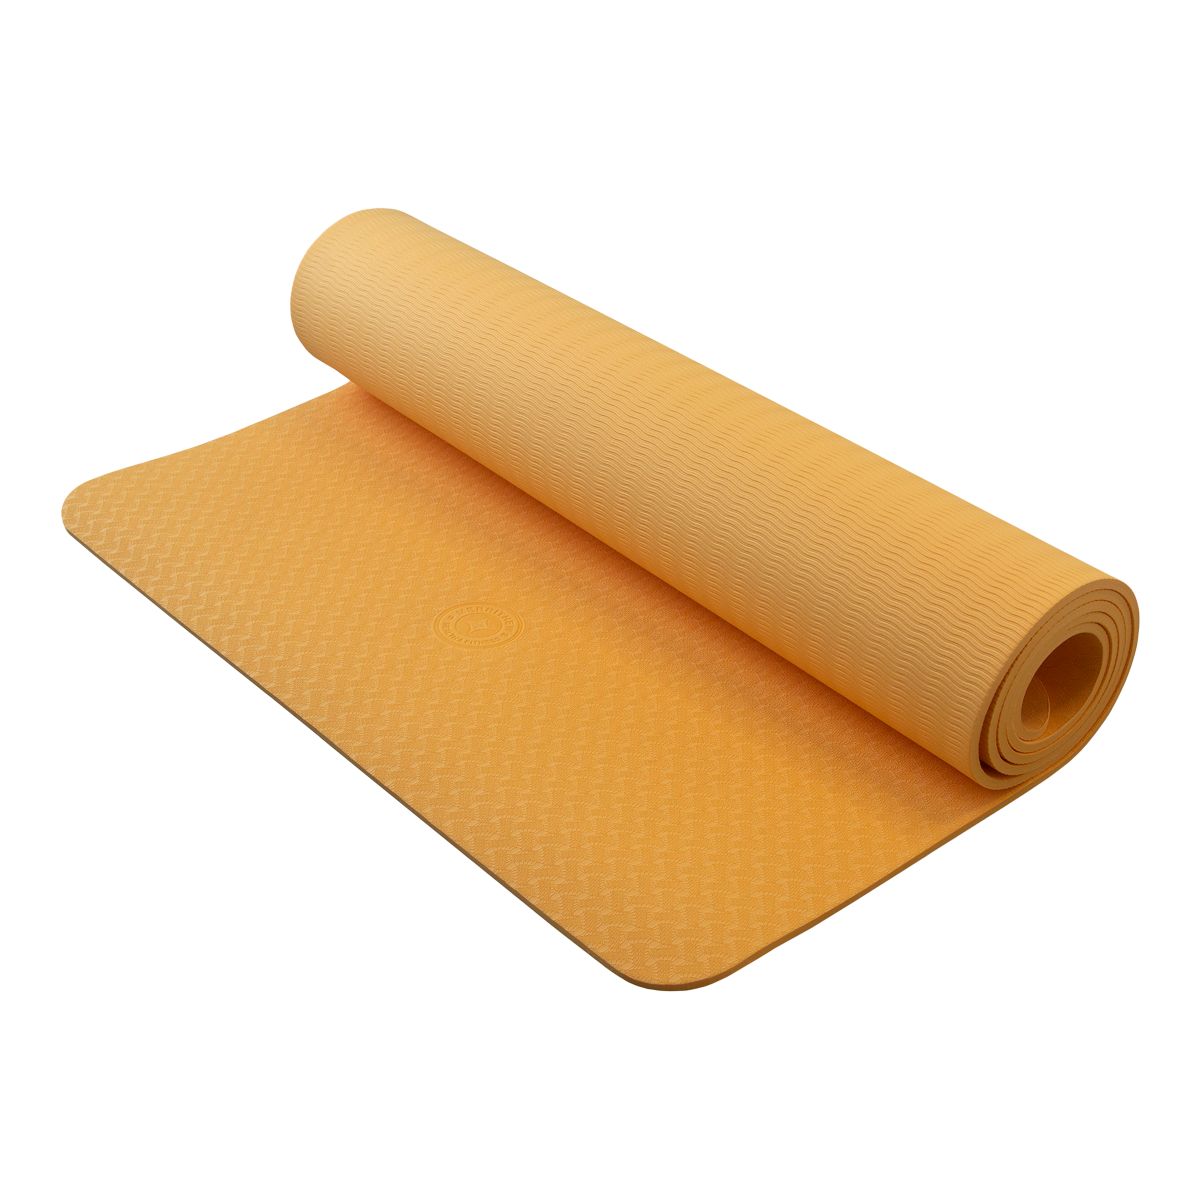 ECO friendly TPE Thick foldable Pilates non slip yoga mat (6mm